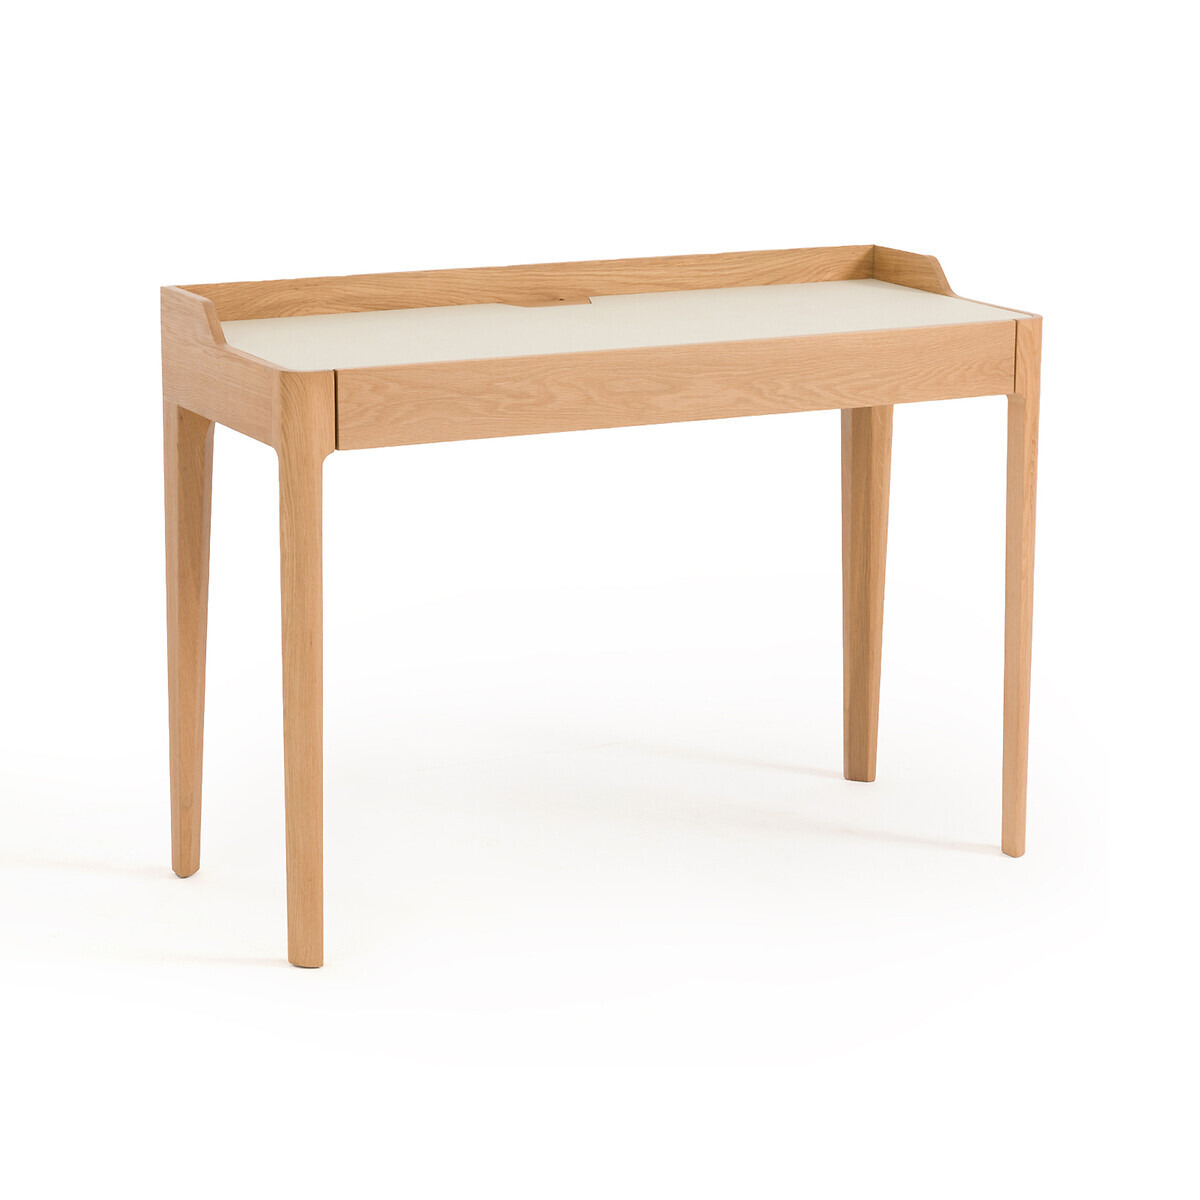 Junius Oak and Linoleum Desk, designed by E. Gallina - image 1